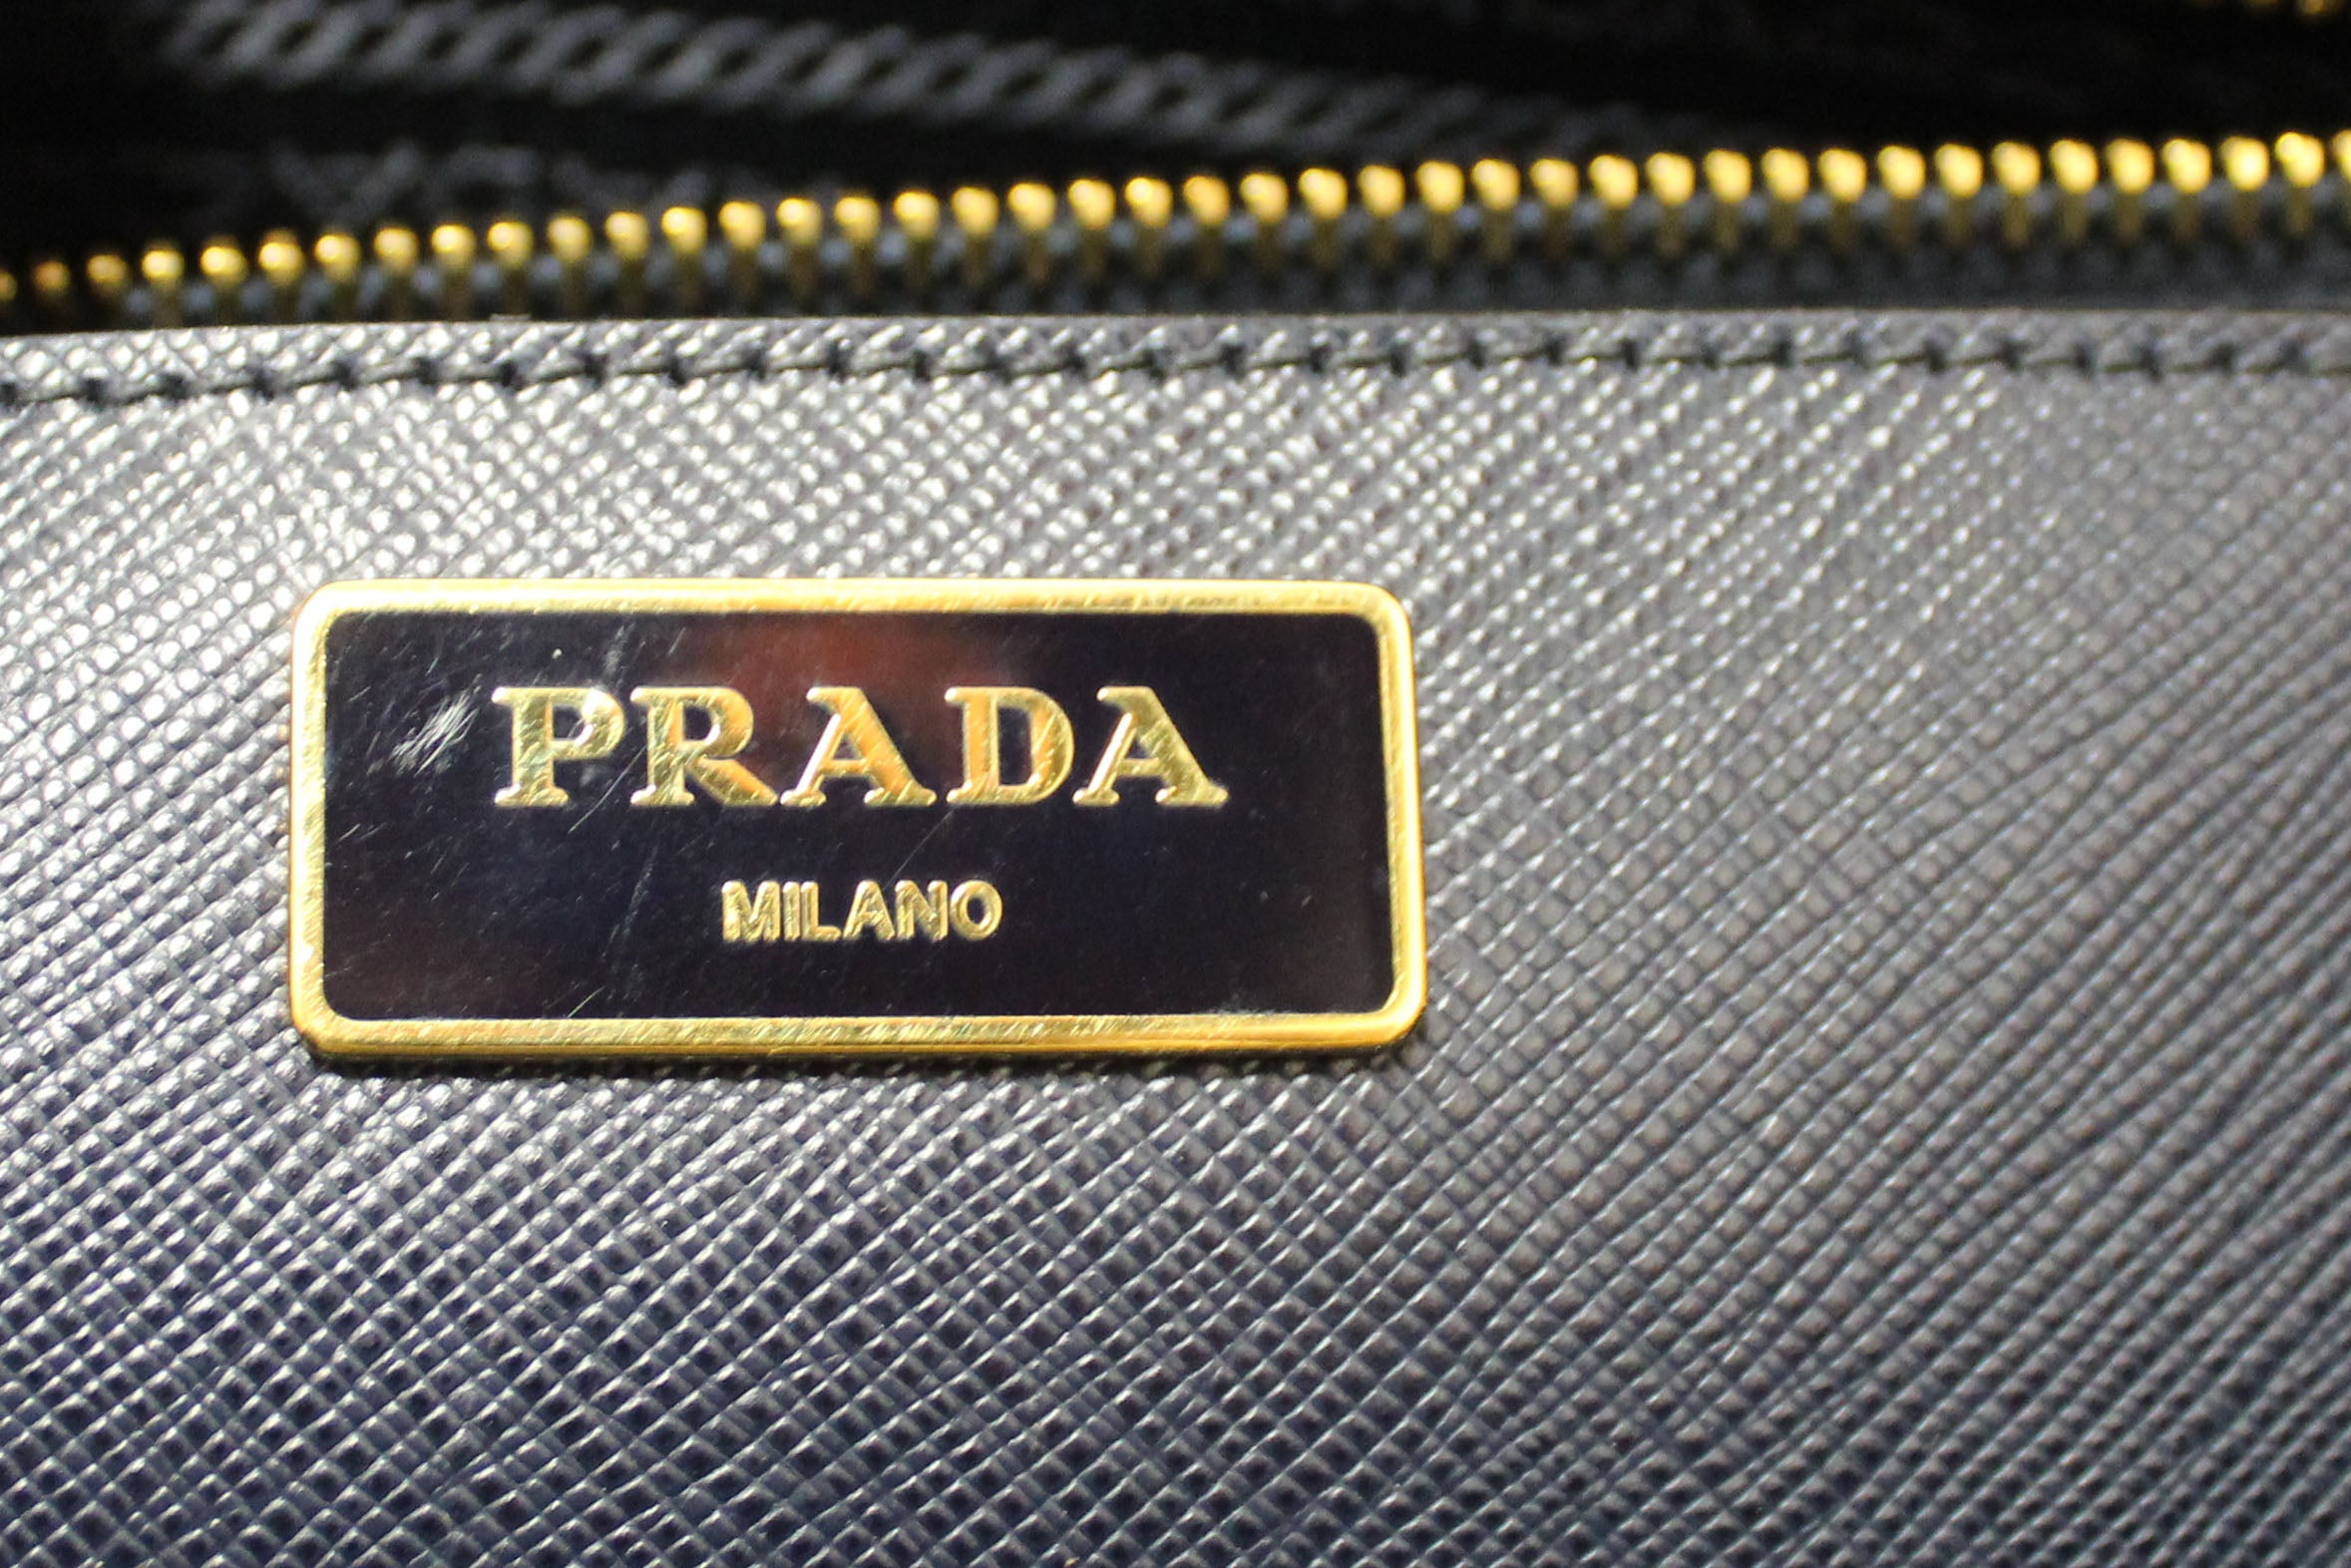 Authentic Prada Navy Blue Saffiano Lux Leather Galleria Large Tote Bag